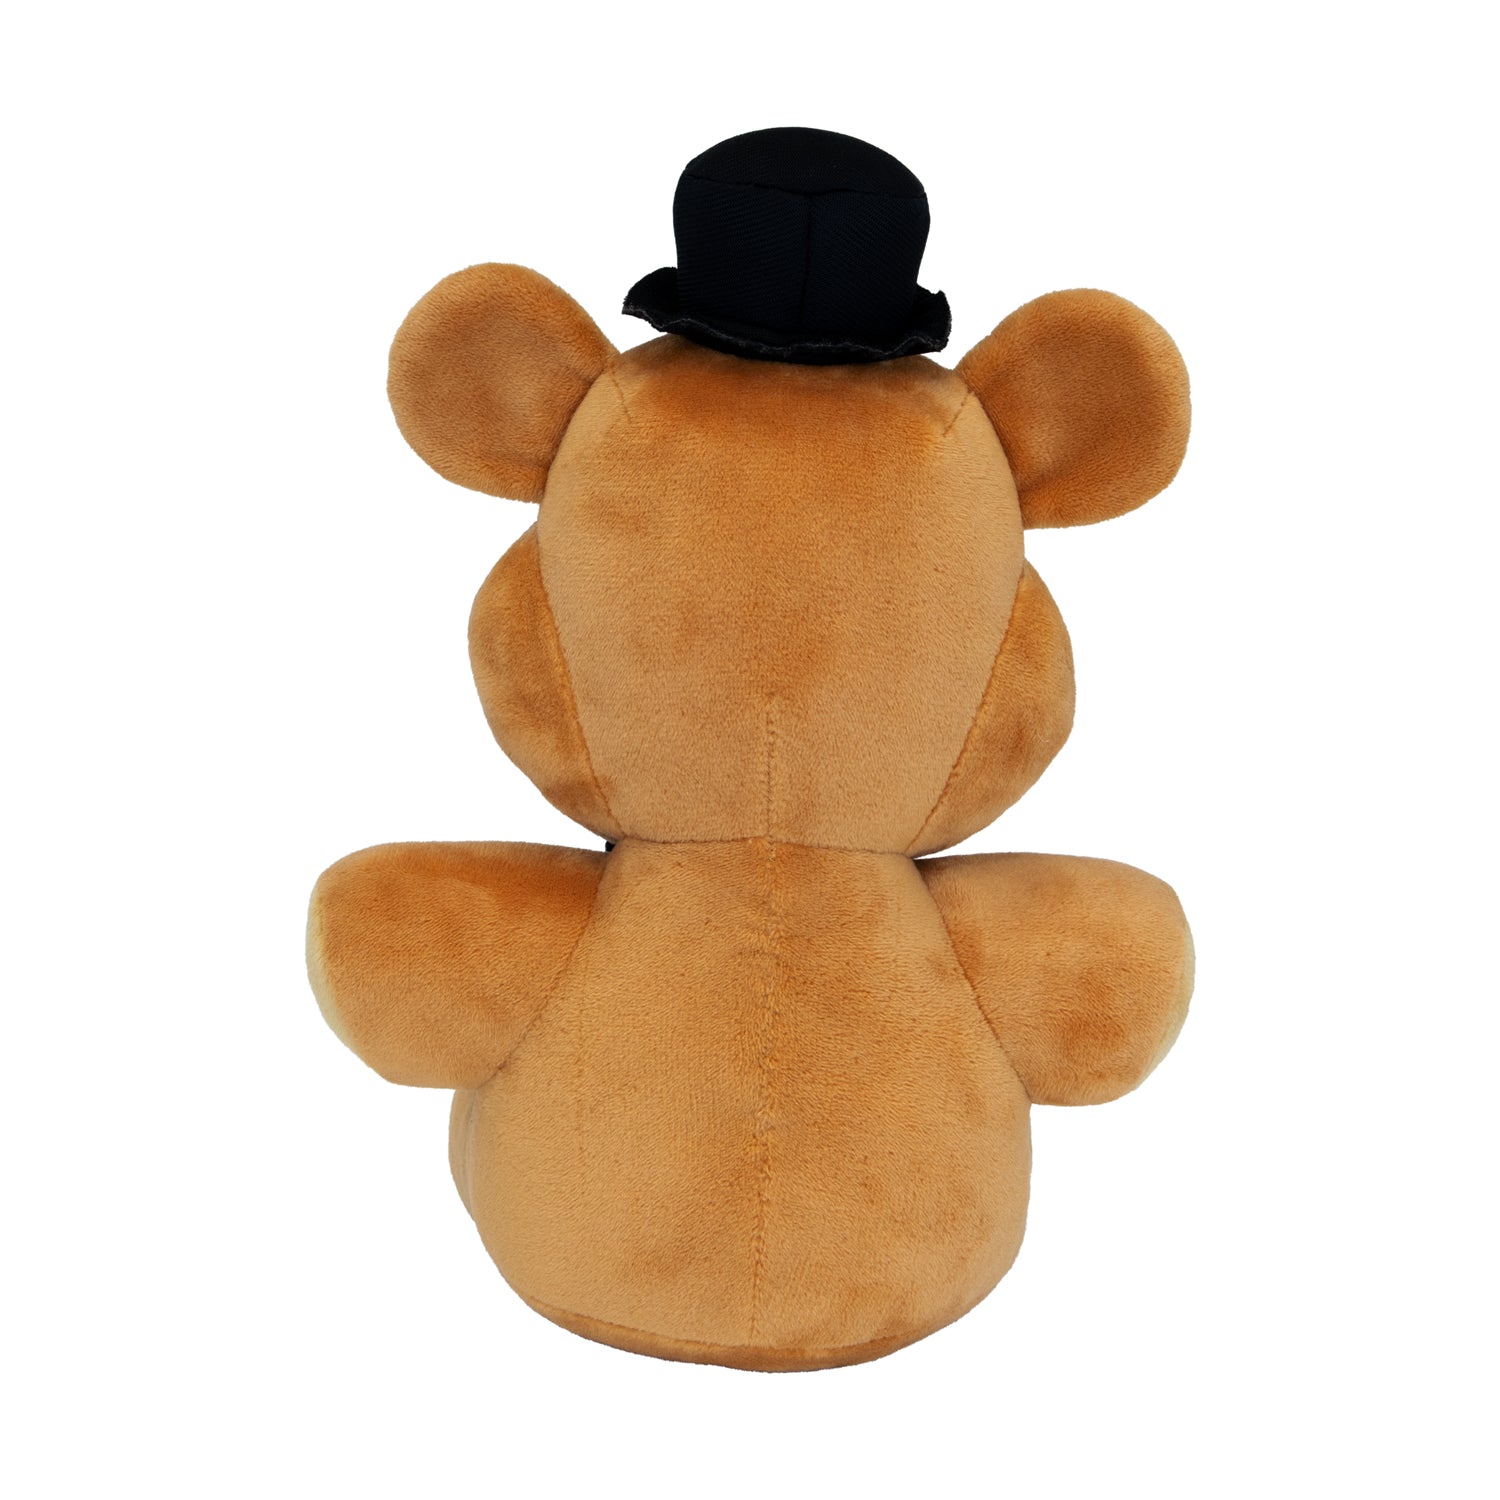 10 Freddy - Large Size Five Nights at Freddy's FNAF Brown Bear Plush Doll  Toy